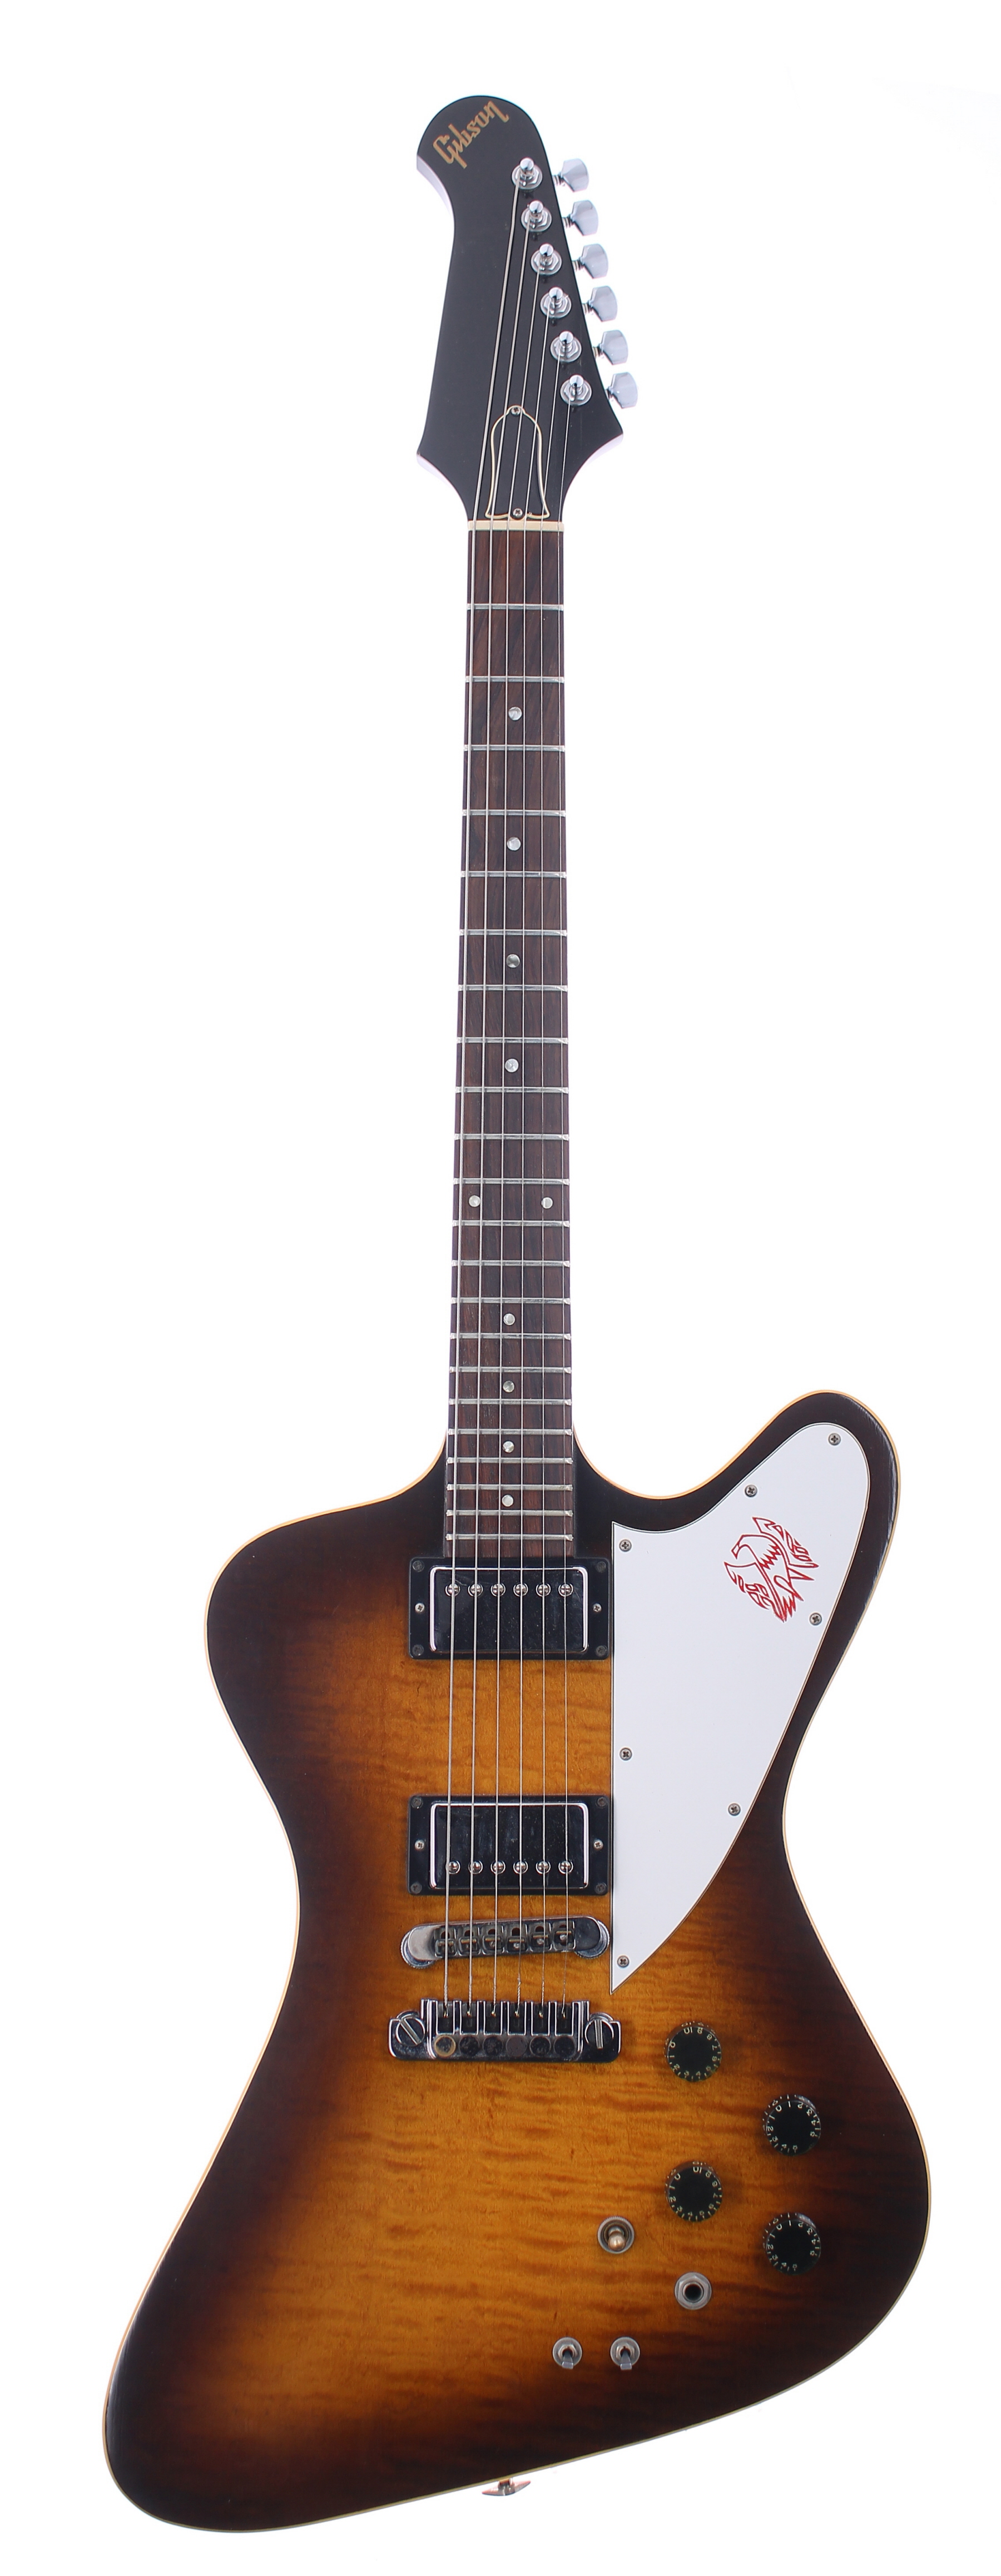 1982 Gibson Firebird II Artist electric guitar, made in USA, ser. no. 8xxxxxx4; Body: tobacco